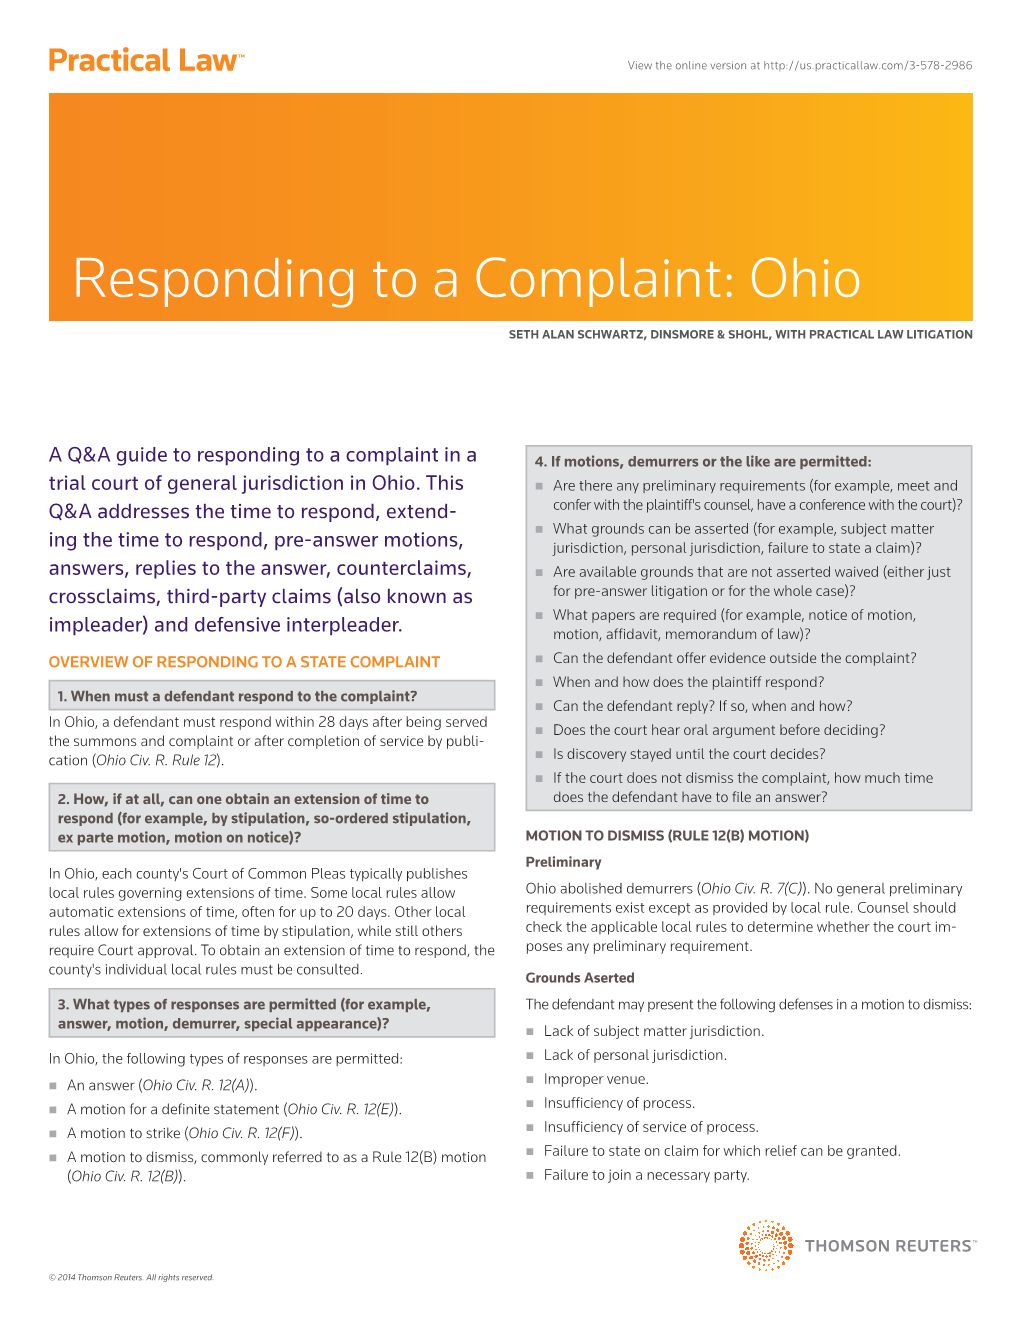 Responding to a Complaint: Ohio